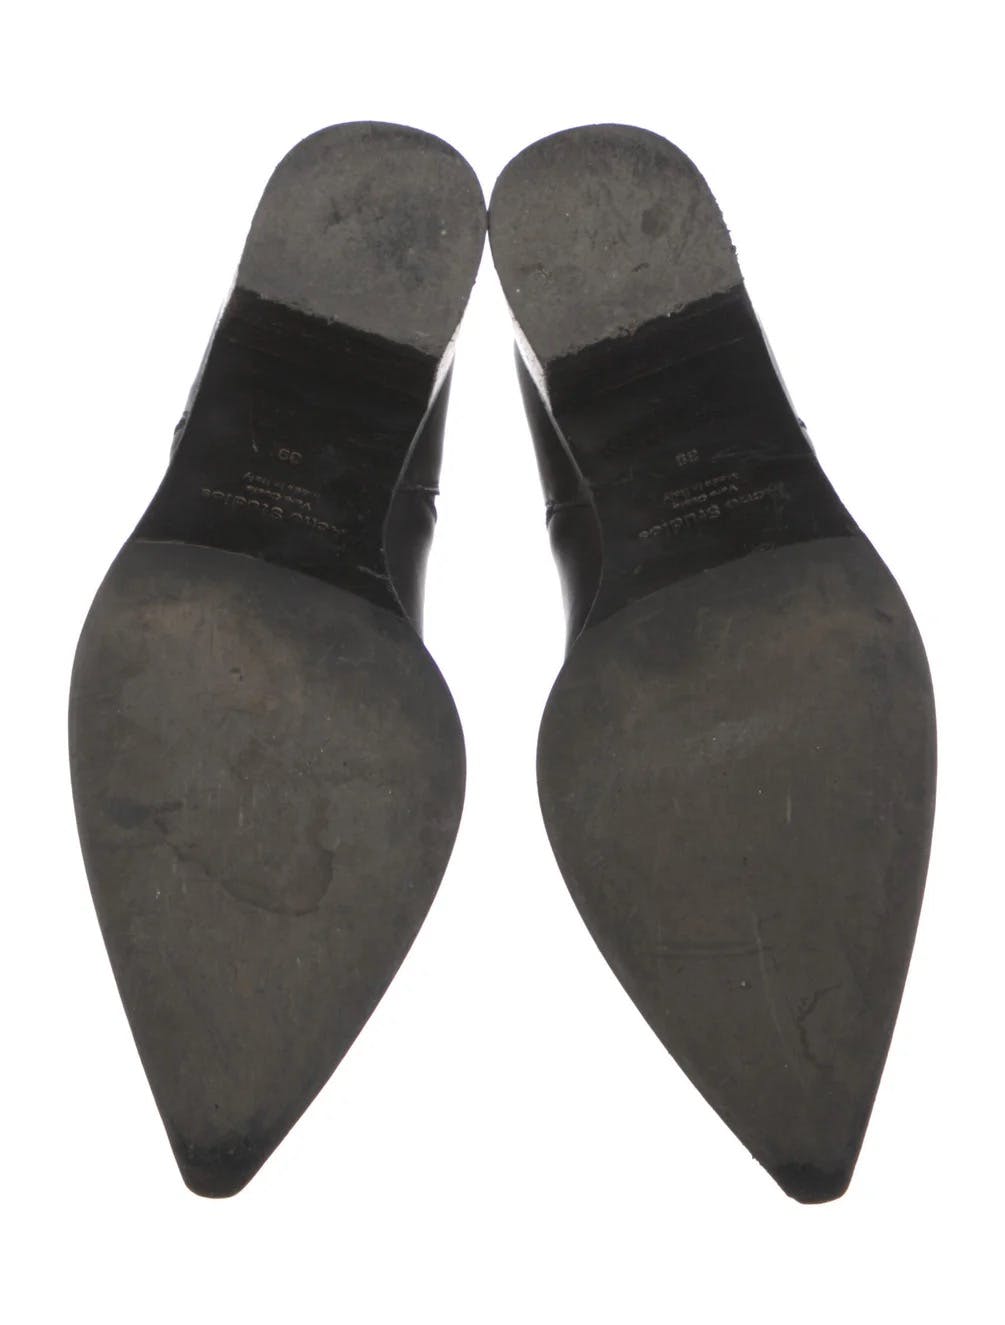 Leather Cuban heel boots - 5